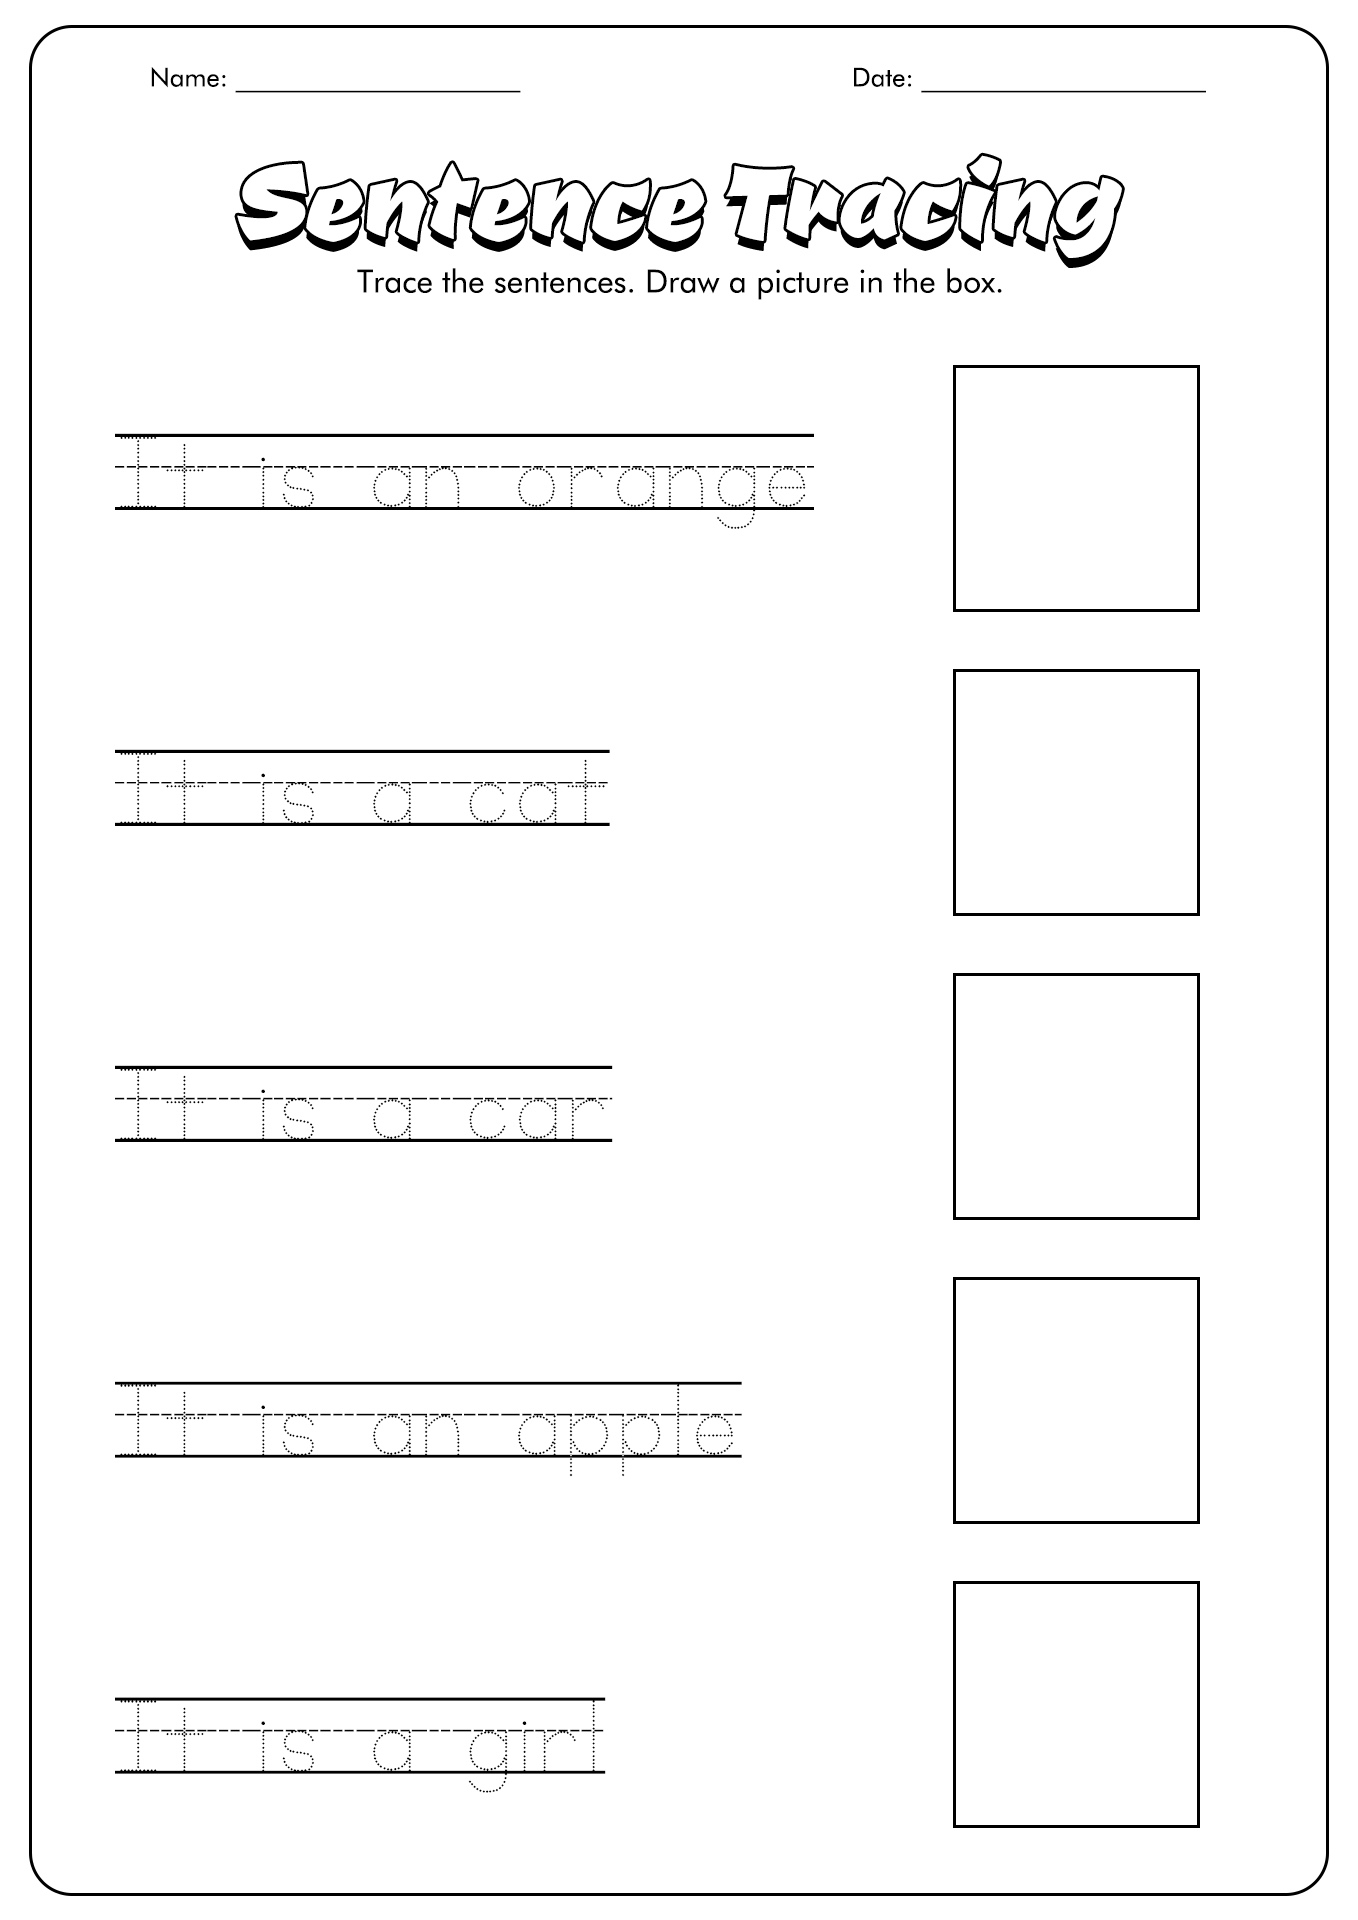 Sentence Tracing Worksheets Kindergarten Image